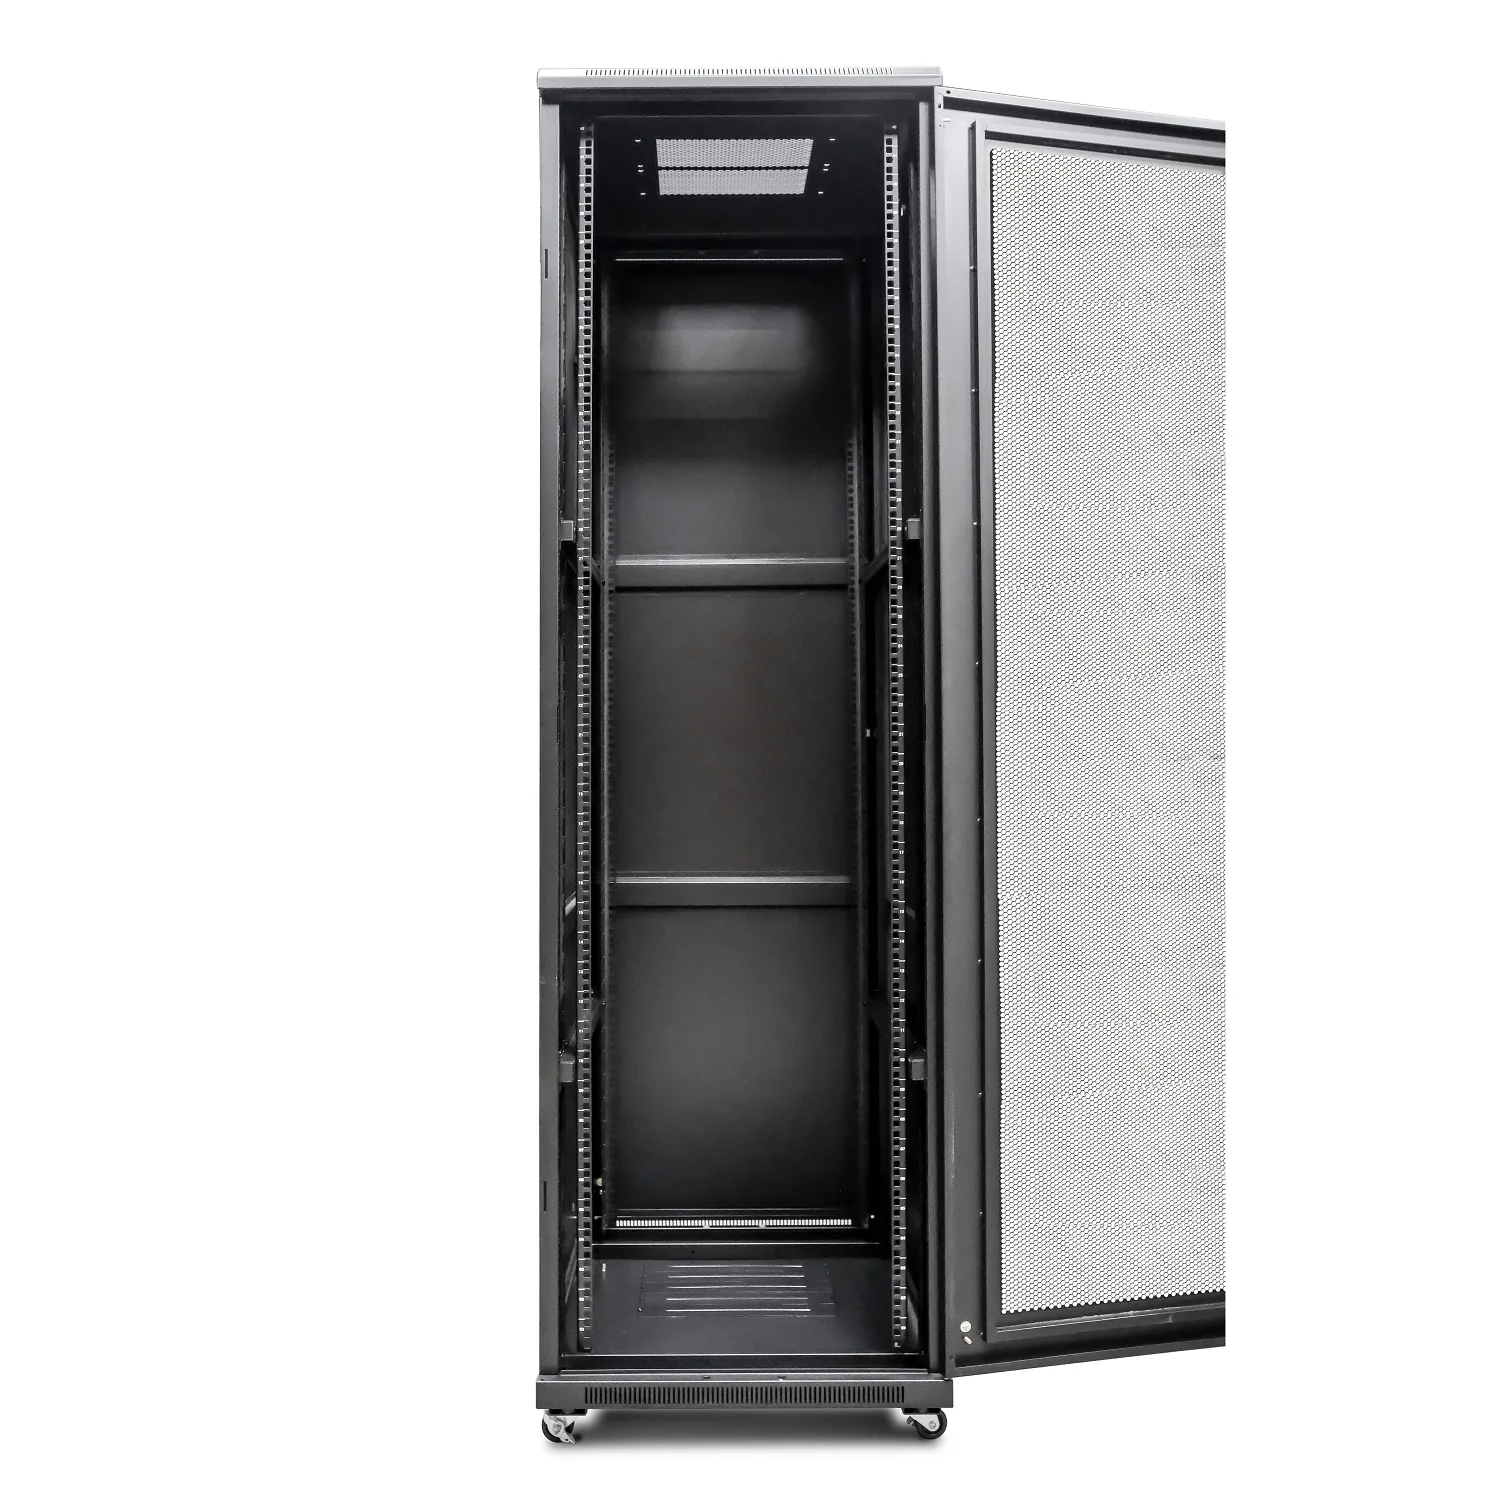 Server Rack 19 800x1000 42U Black Grilled Door Evolution series - Network  Cabinet Rack - Rack Cabinets and Accessories - Networking